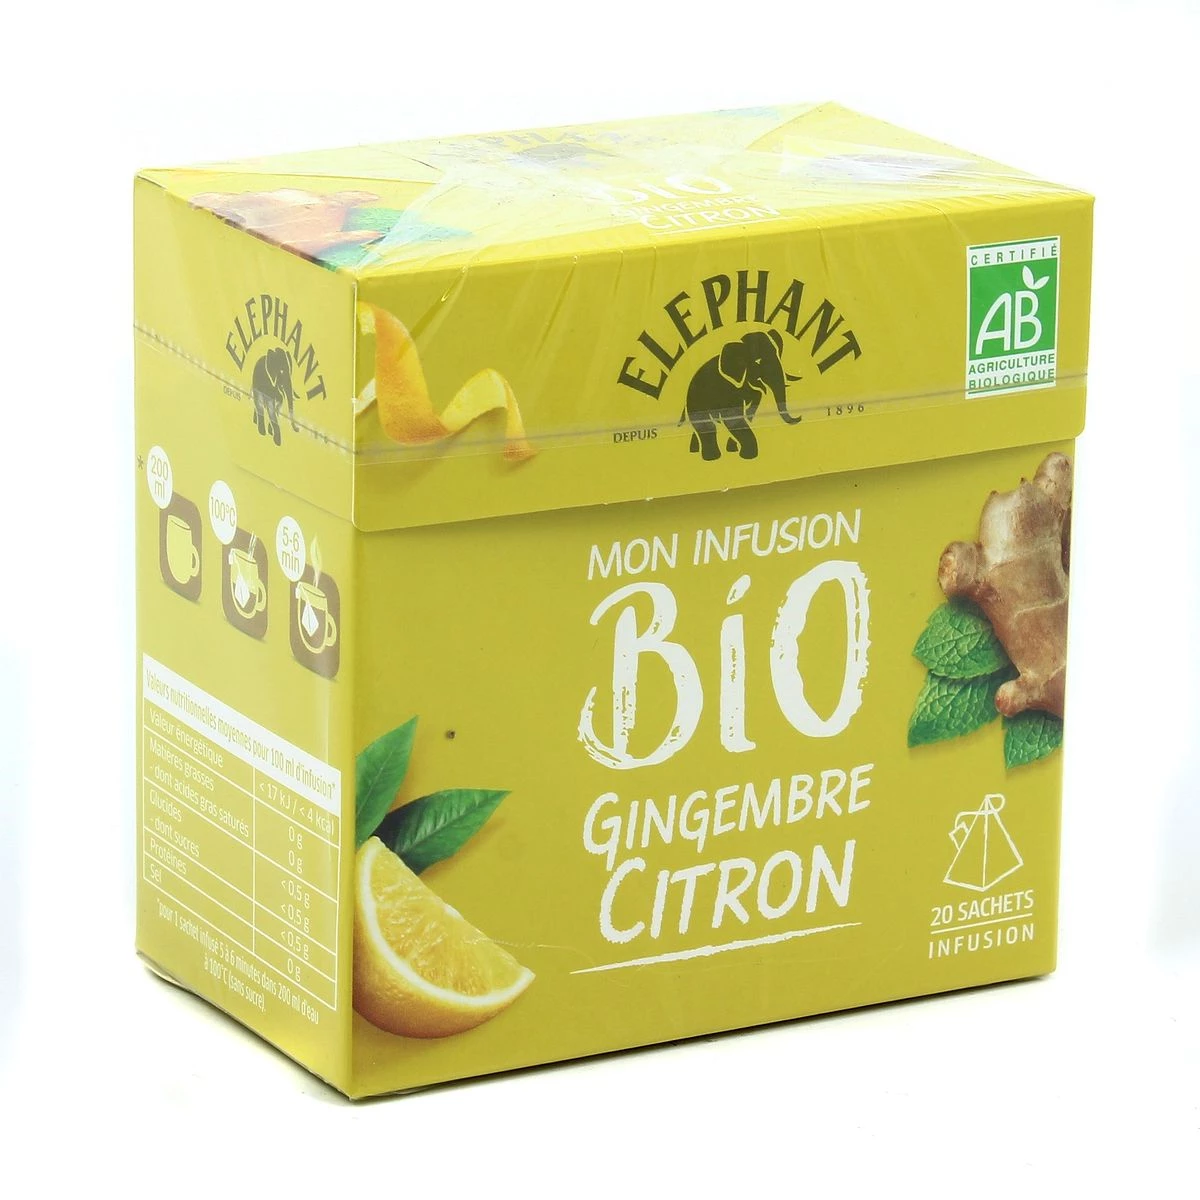 Mon infusion bio gingembre, citron x20 34g - ELEPHANT